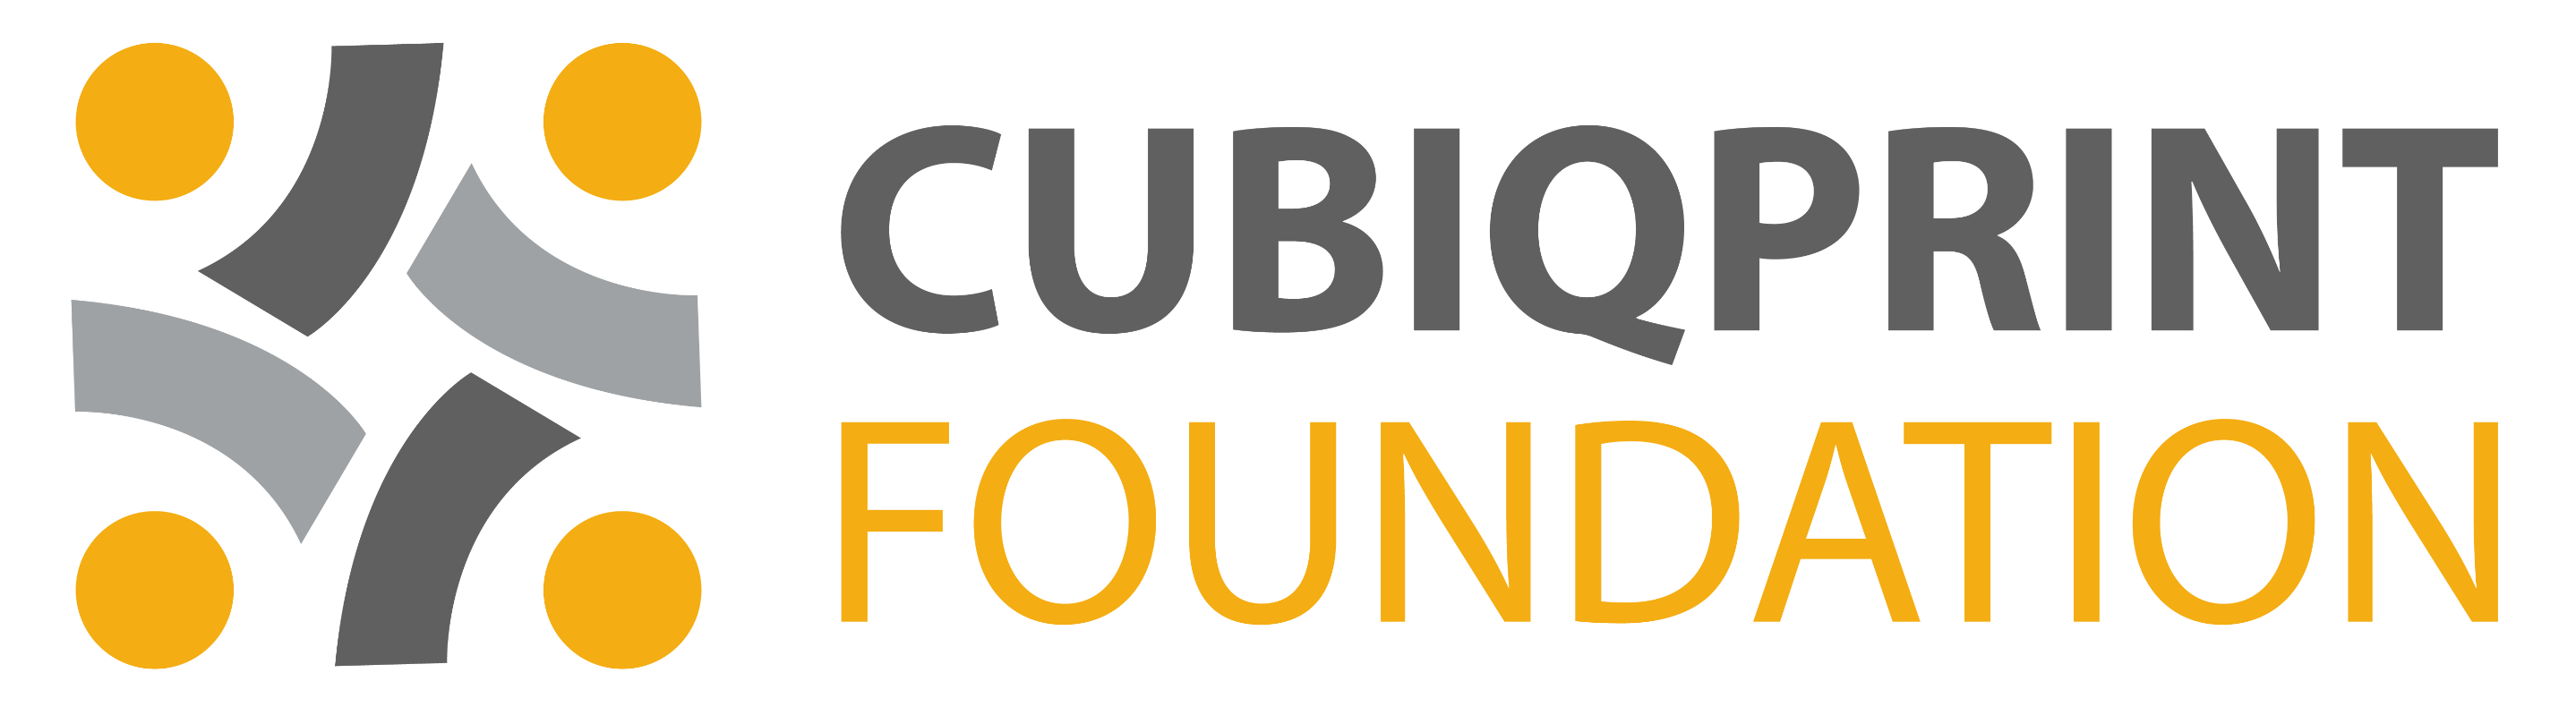 Cubiqprint Foundation